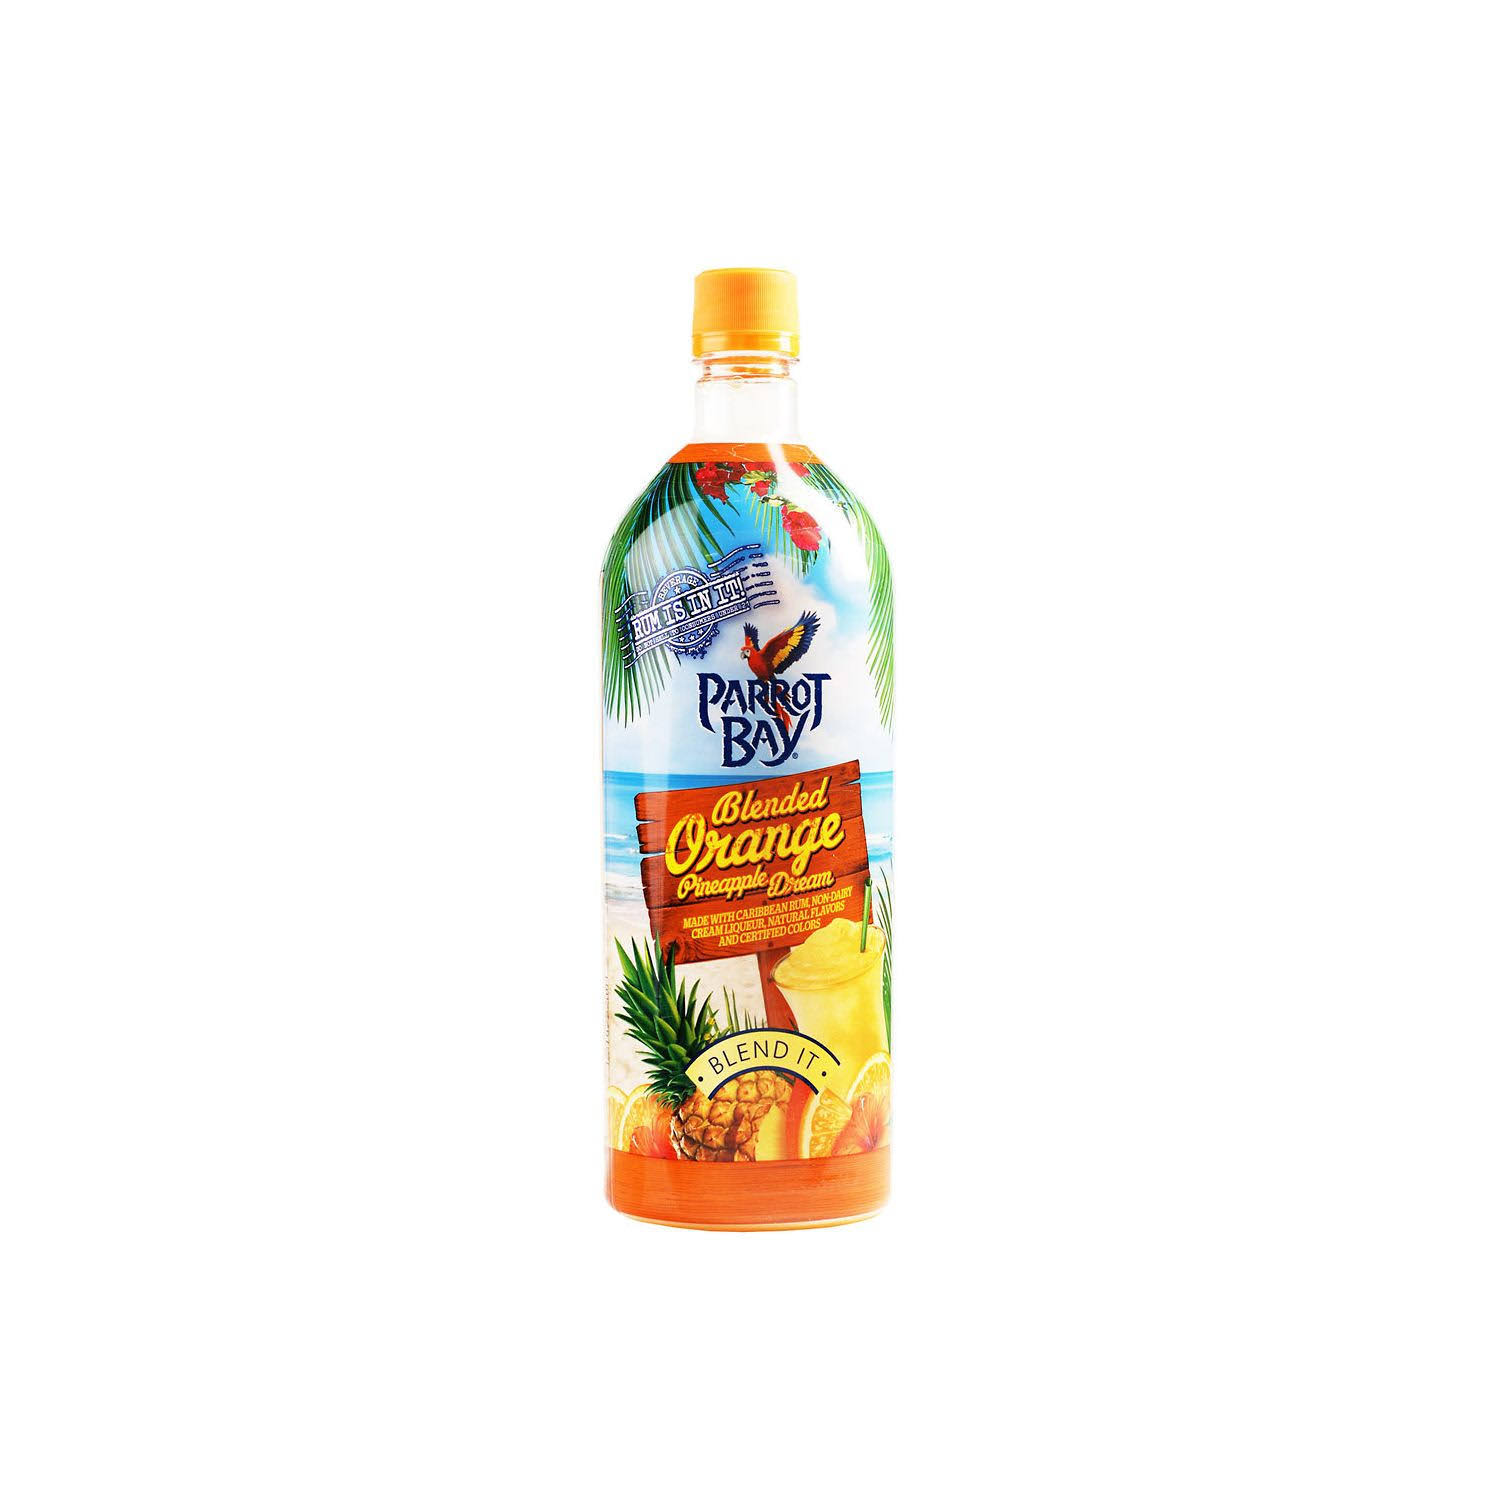 Parrot Bay Caribbean Rum, with Natural Orange Flavors - 750 ml